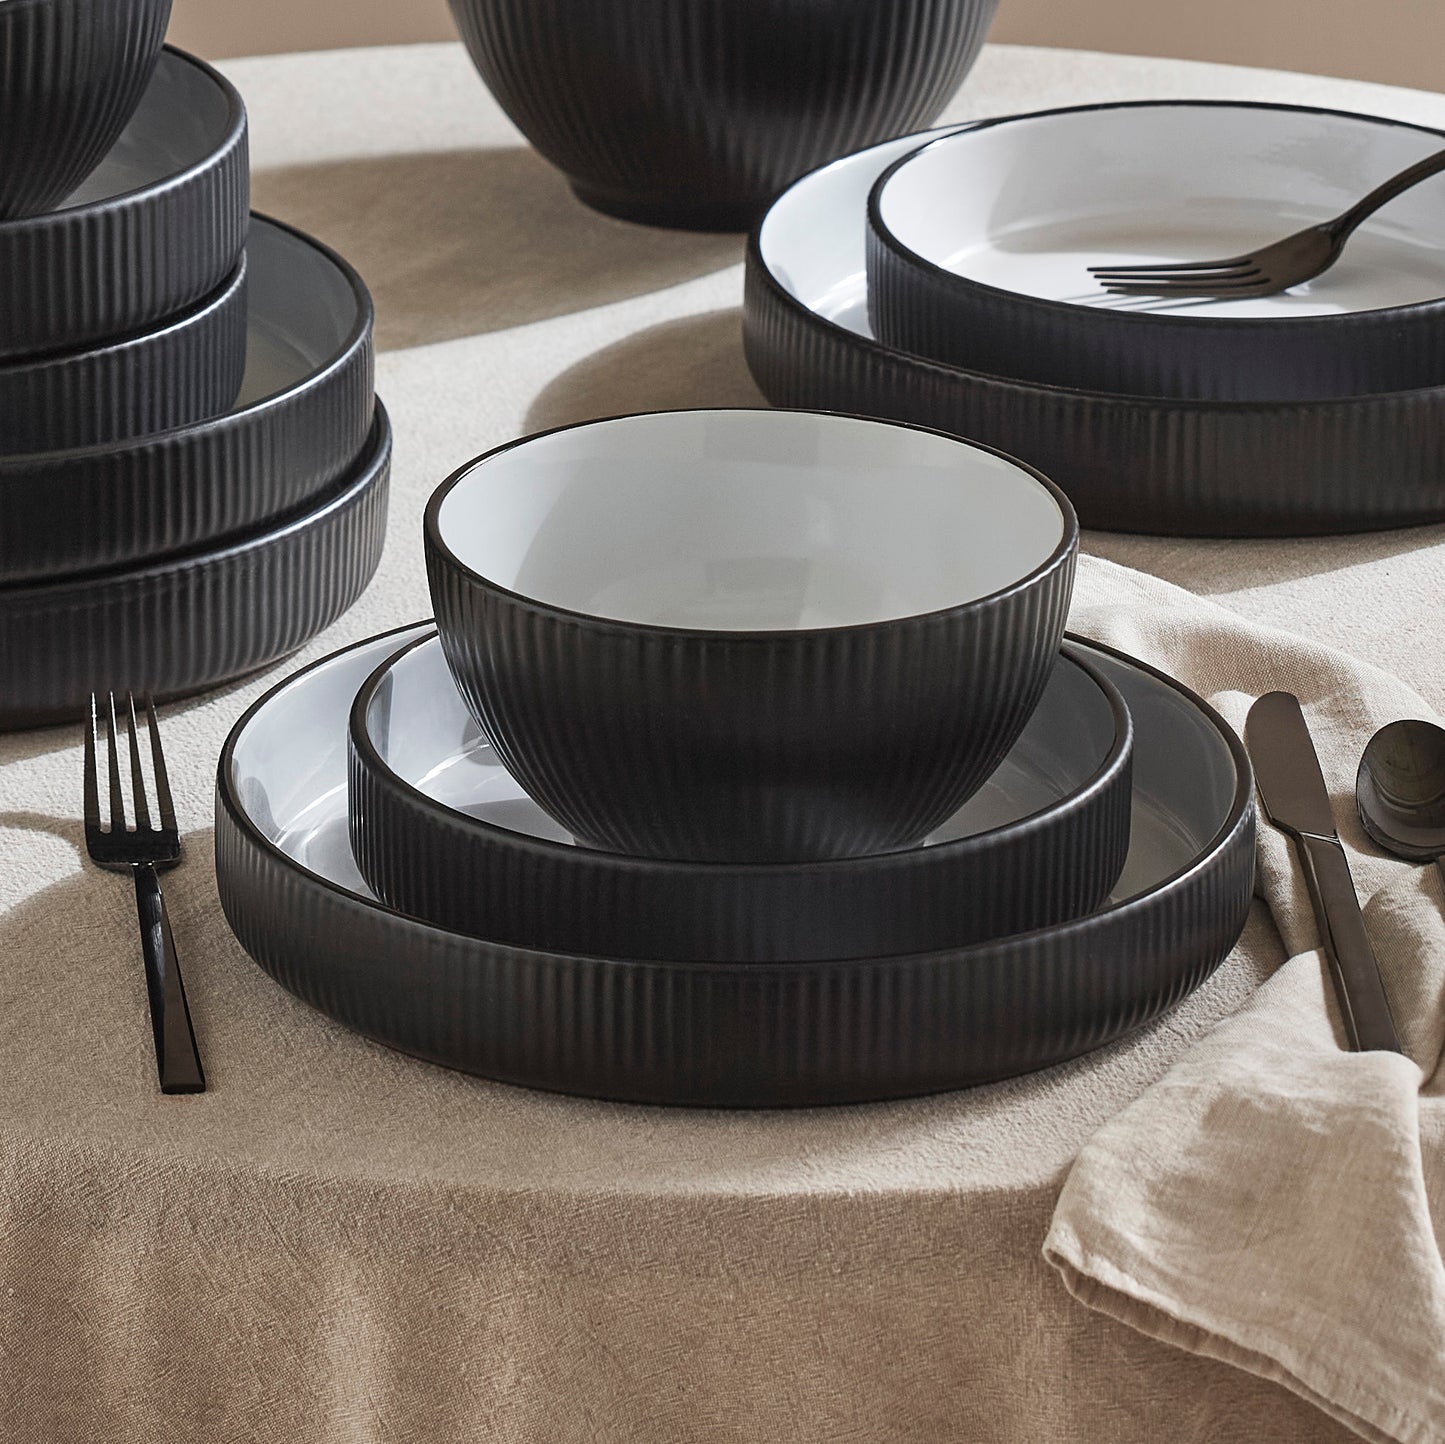 Larosso Stoneware Dinnerware Set - Black/White